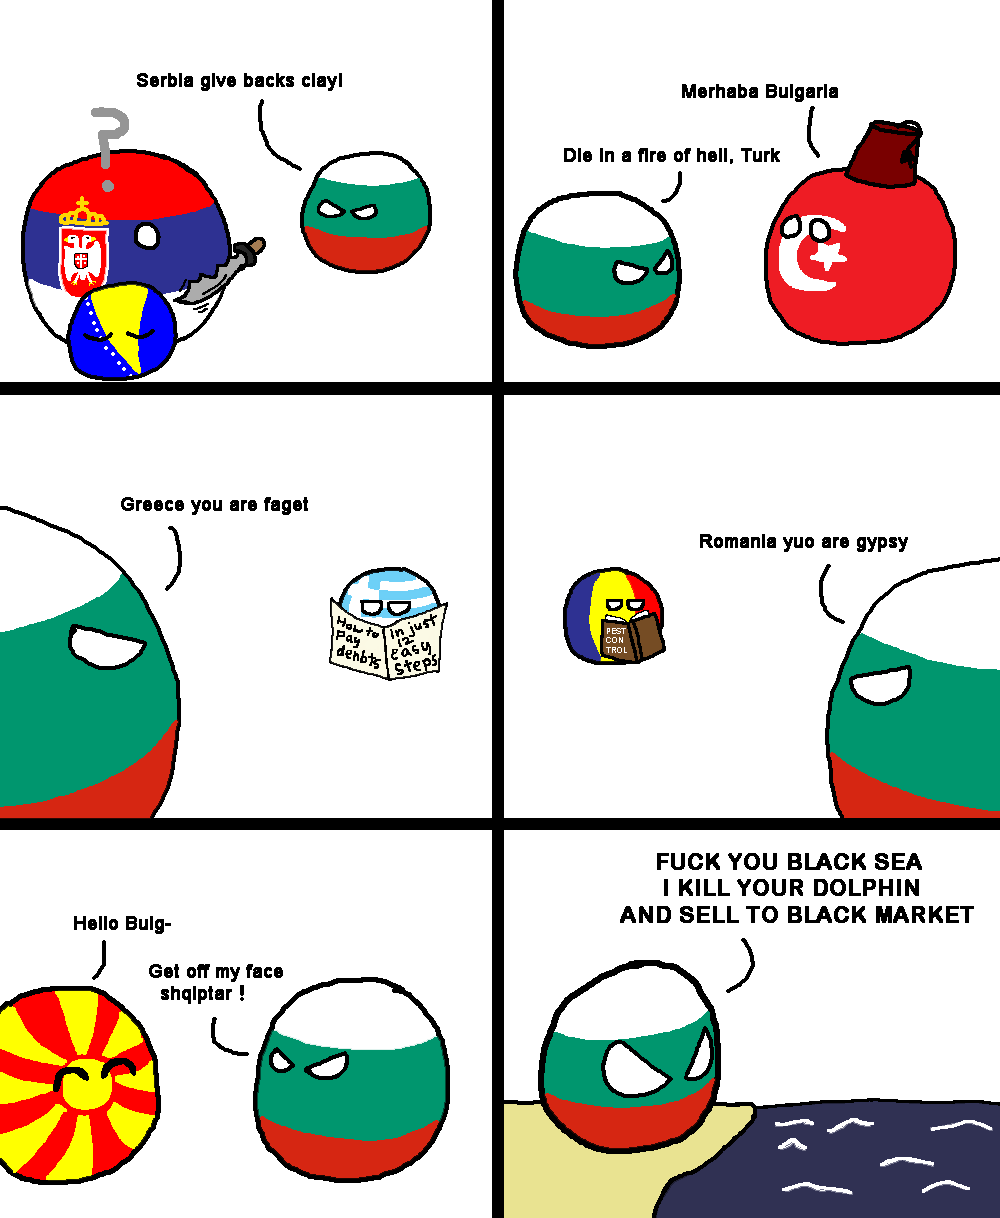 Bulgaria doesn't like its neighbours